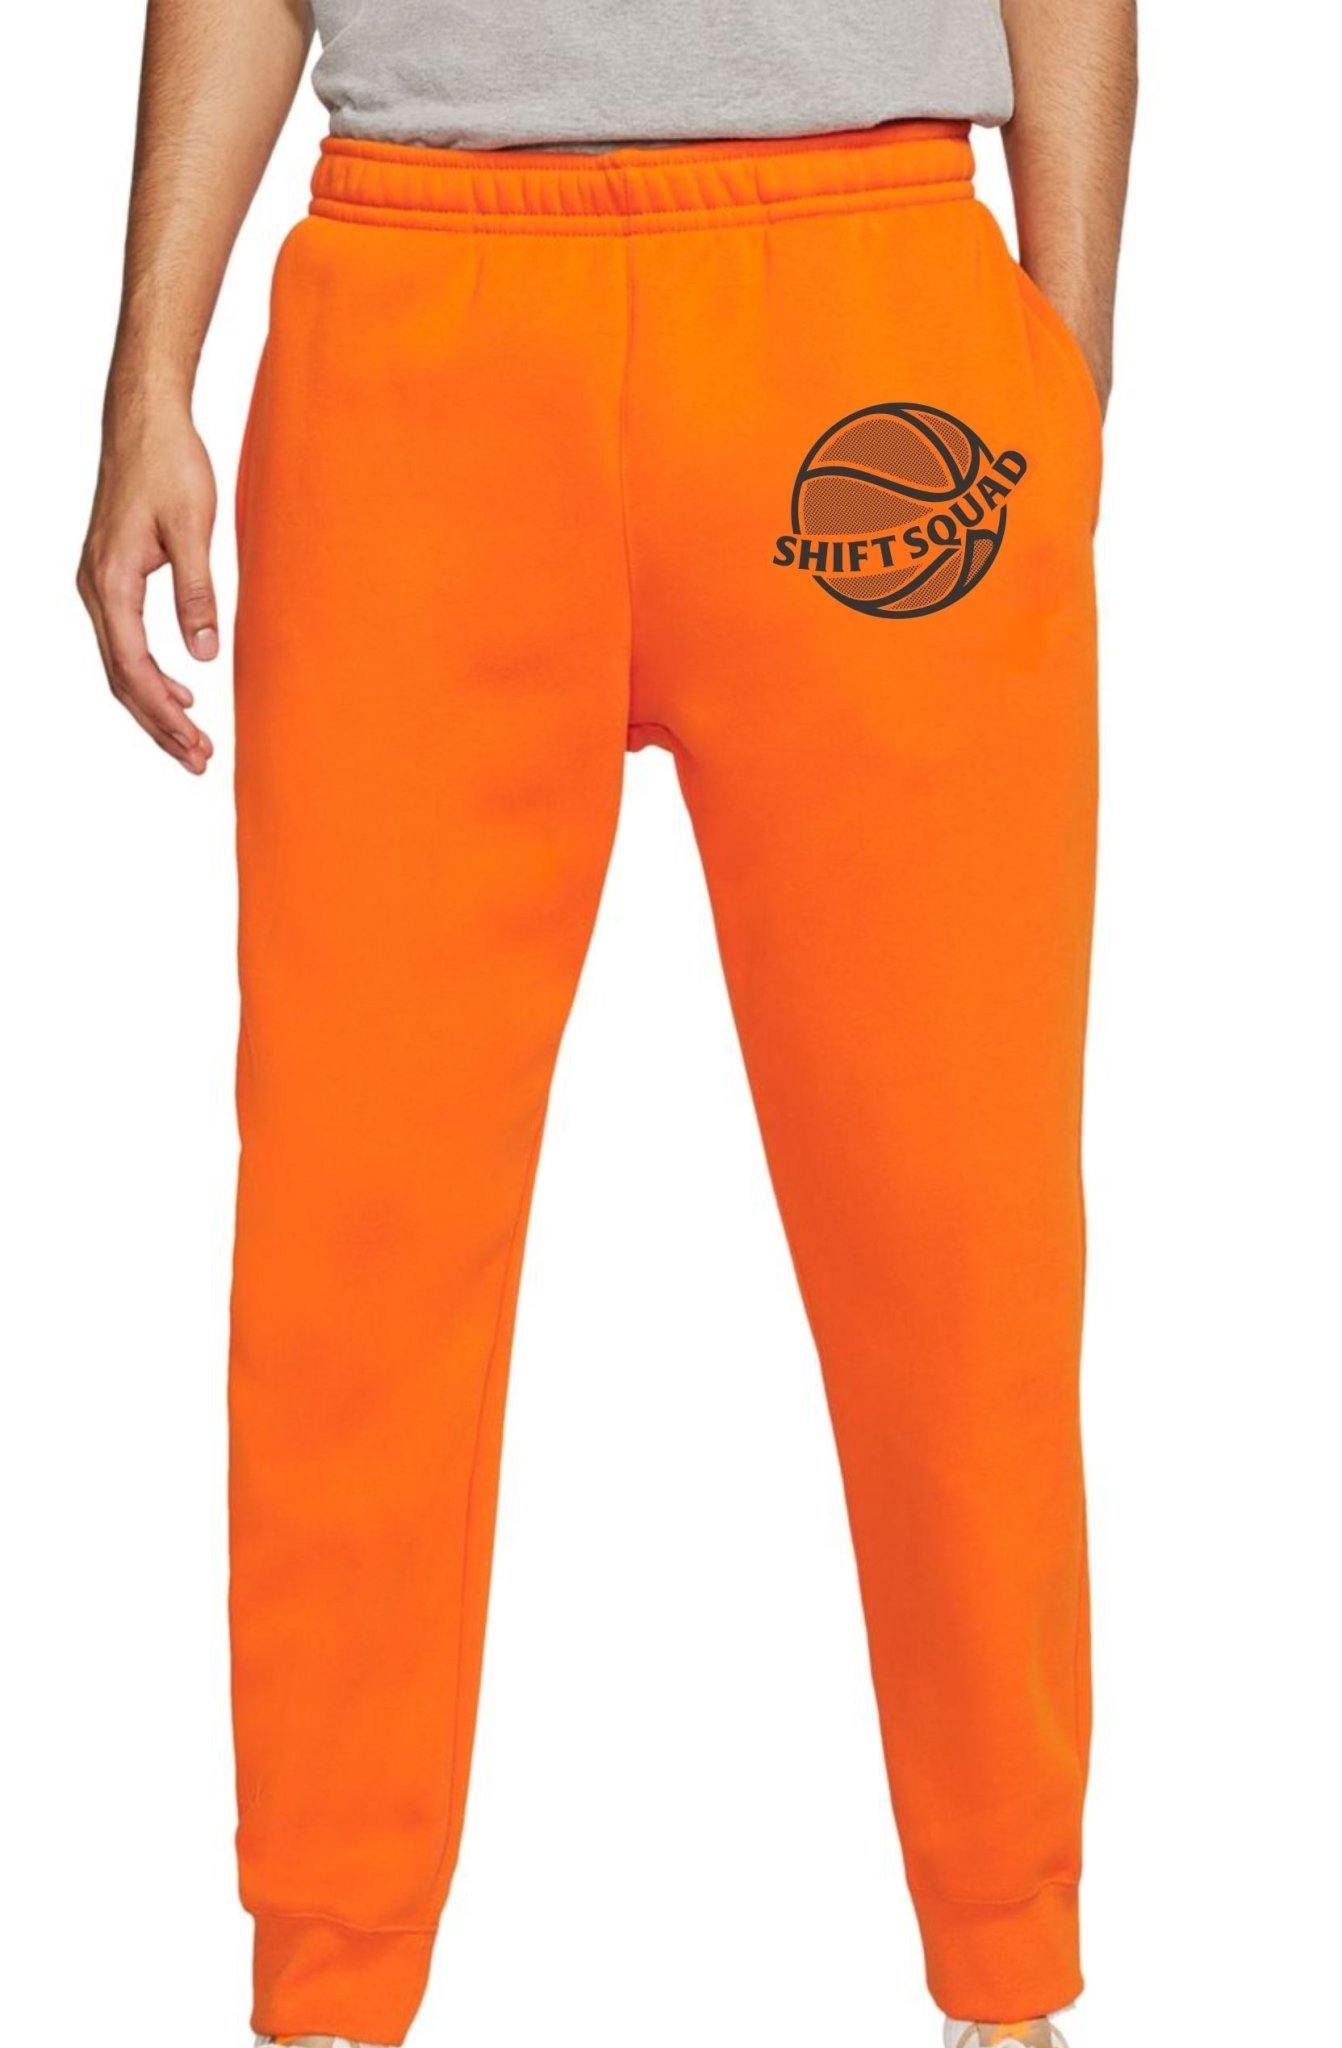 Orange Shiftsquad Men's Sweatpants Fall and Winter Line - Shiftsquad